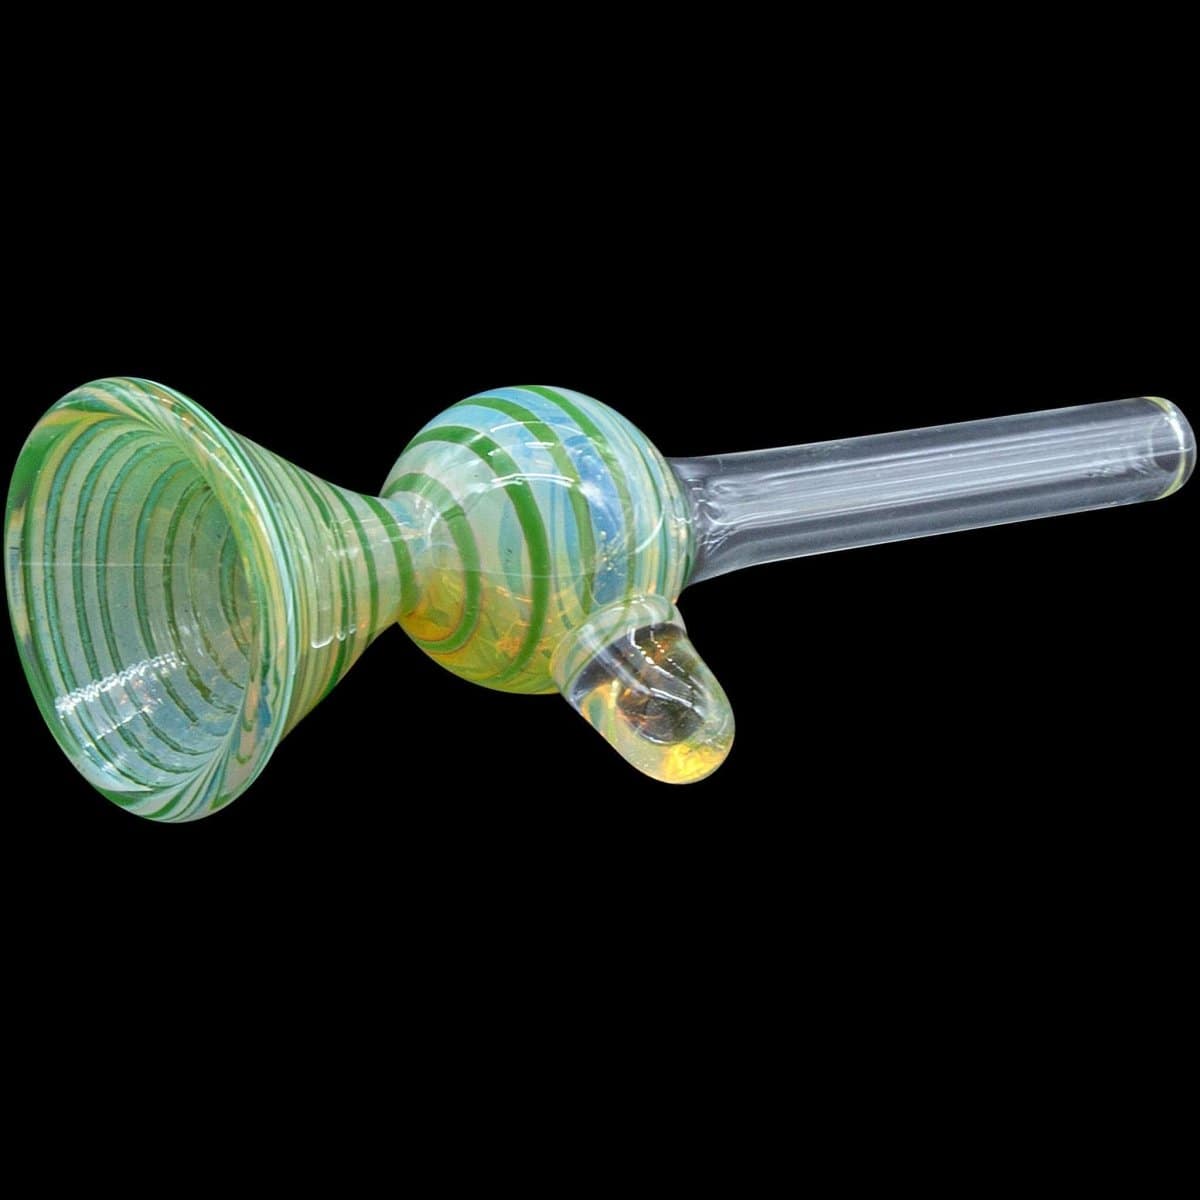 LA Pipes Smoking Accessory Green "Loud Speaker" Pull-Stem Slide Bowl